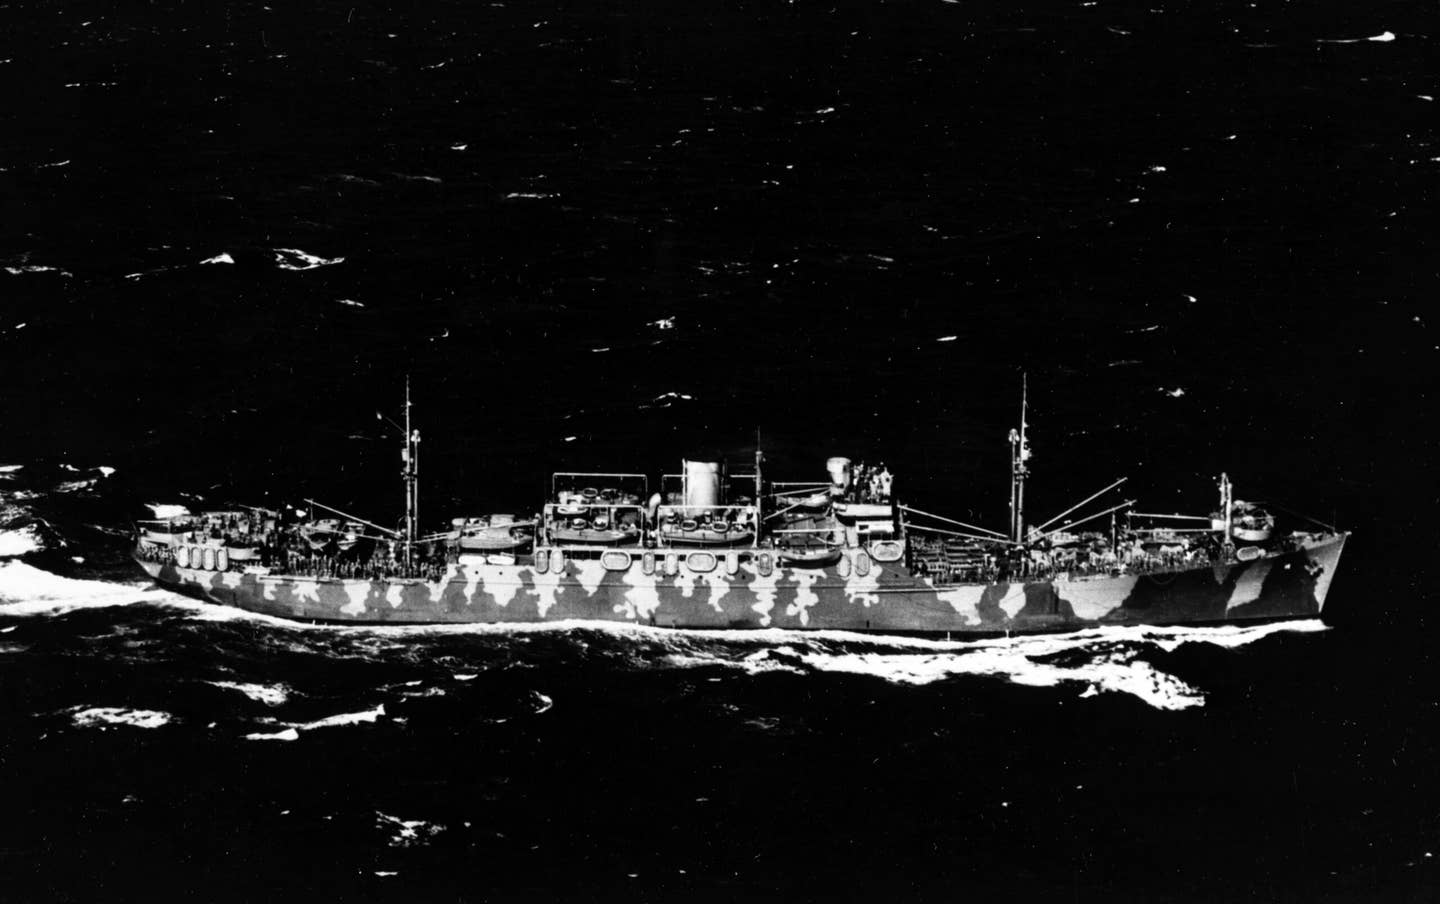 Wearing camouflage, the troop transport USS&nbsp;<em>Neville</em>&nbsp;(AP-16) is seen underway with a convoy in the Atlantic Ocean, in February 1942. <em>U.S. Navy</em>